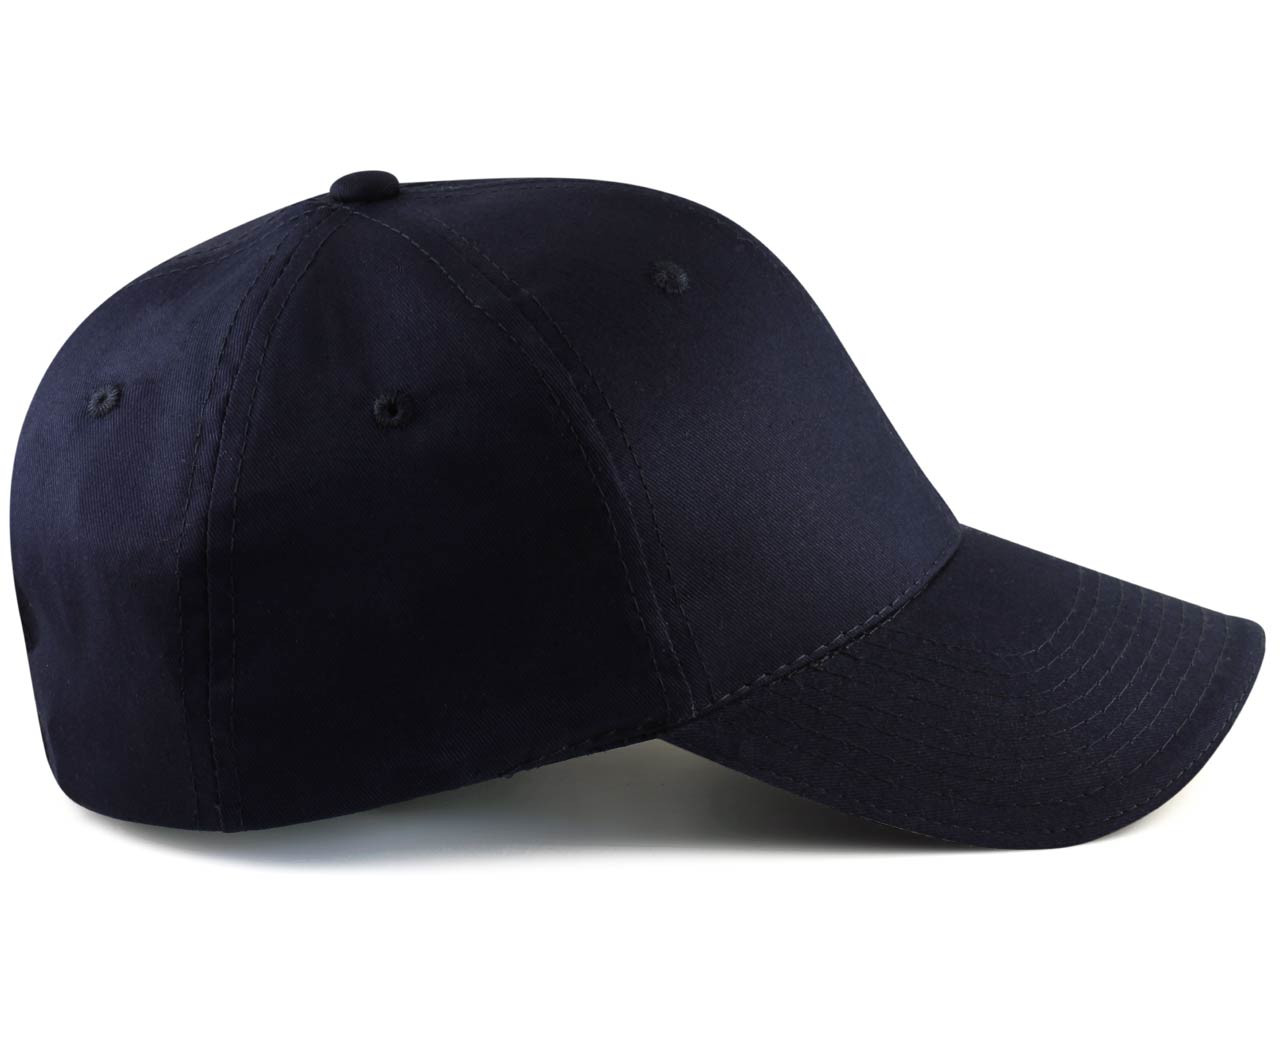 Big Hats Adjustable Baseball Cap in Navy